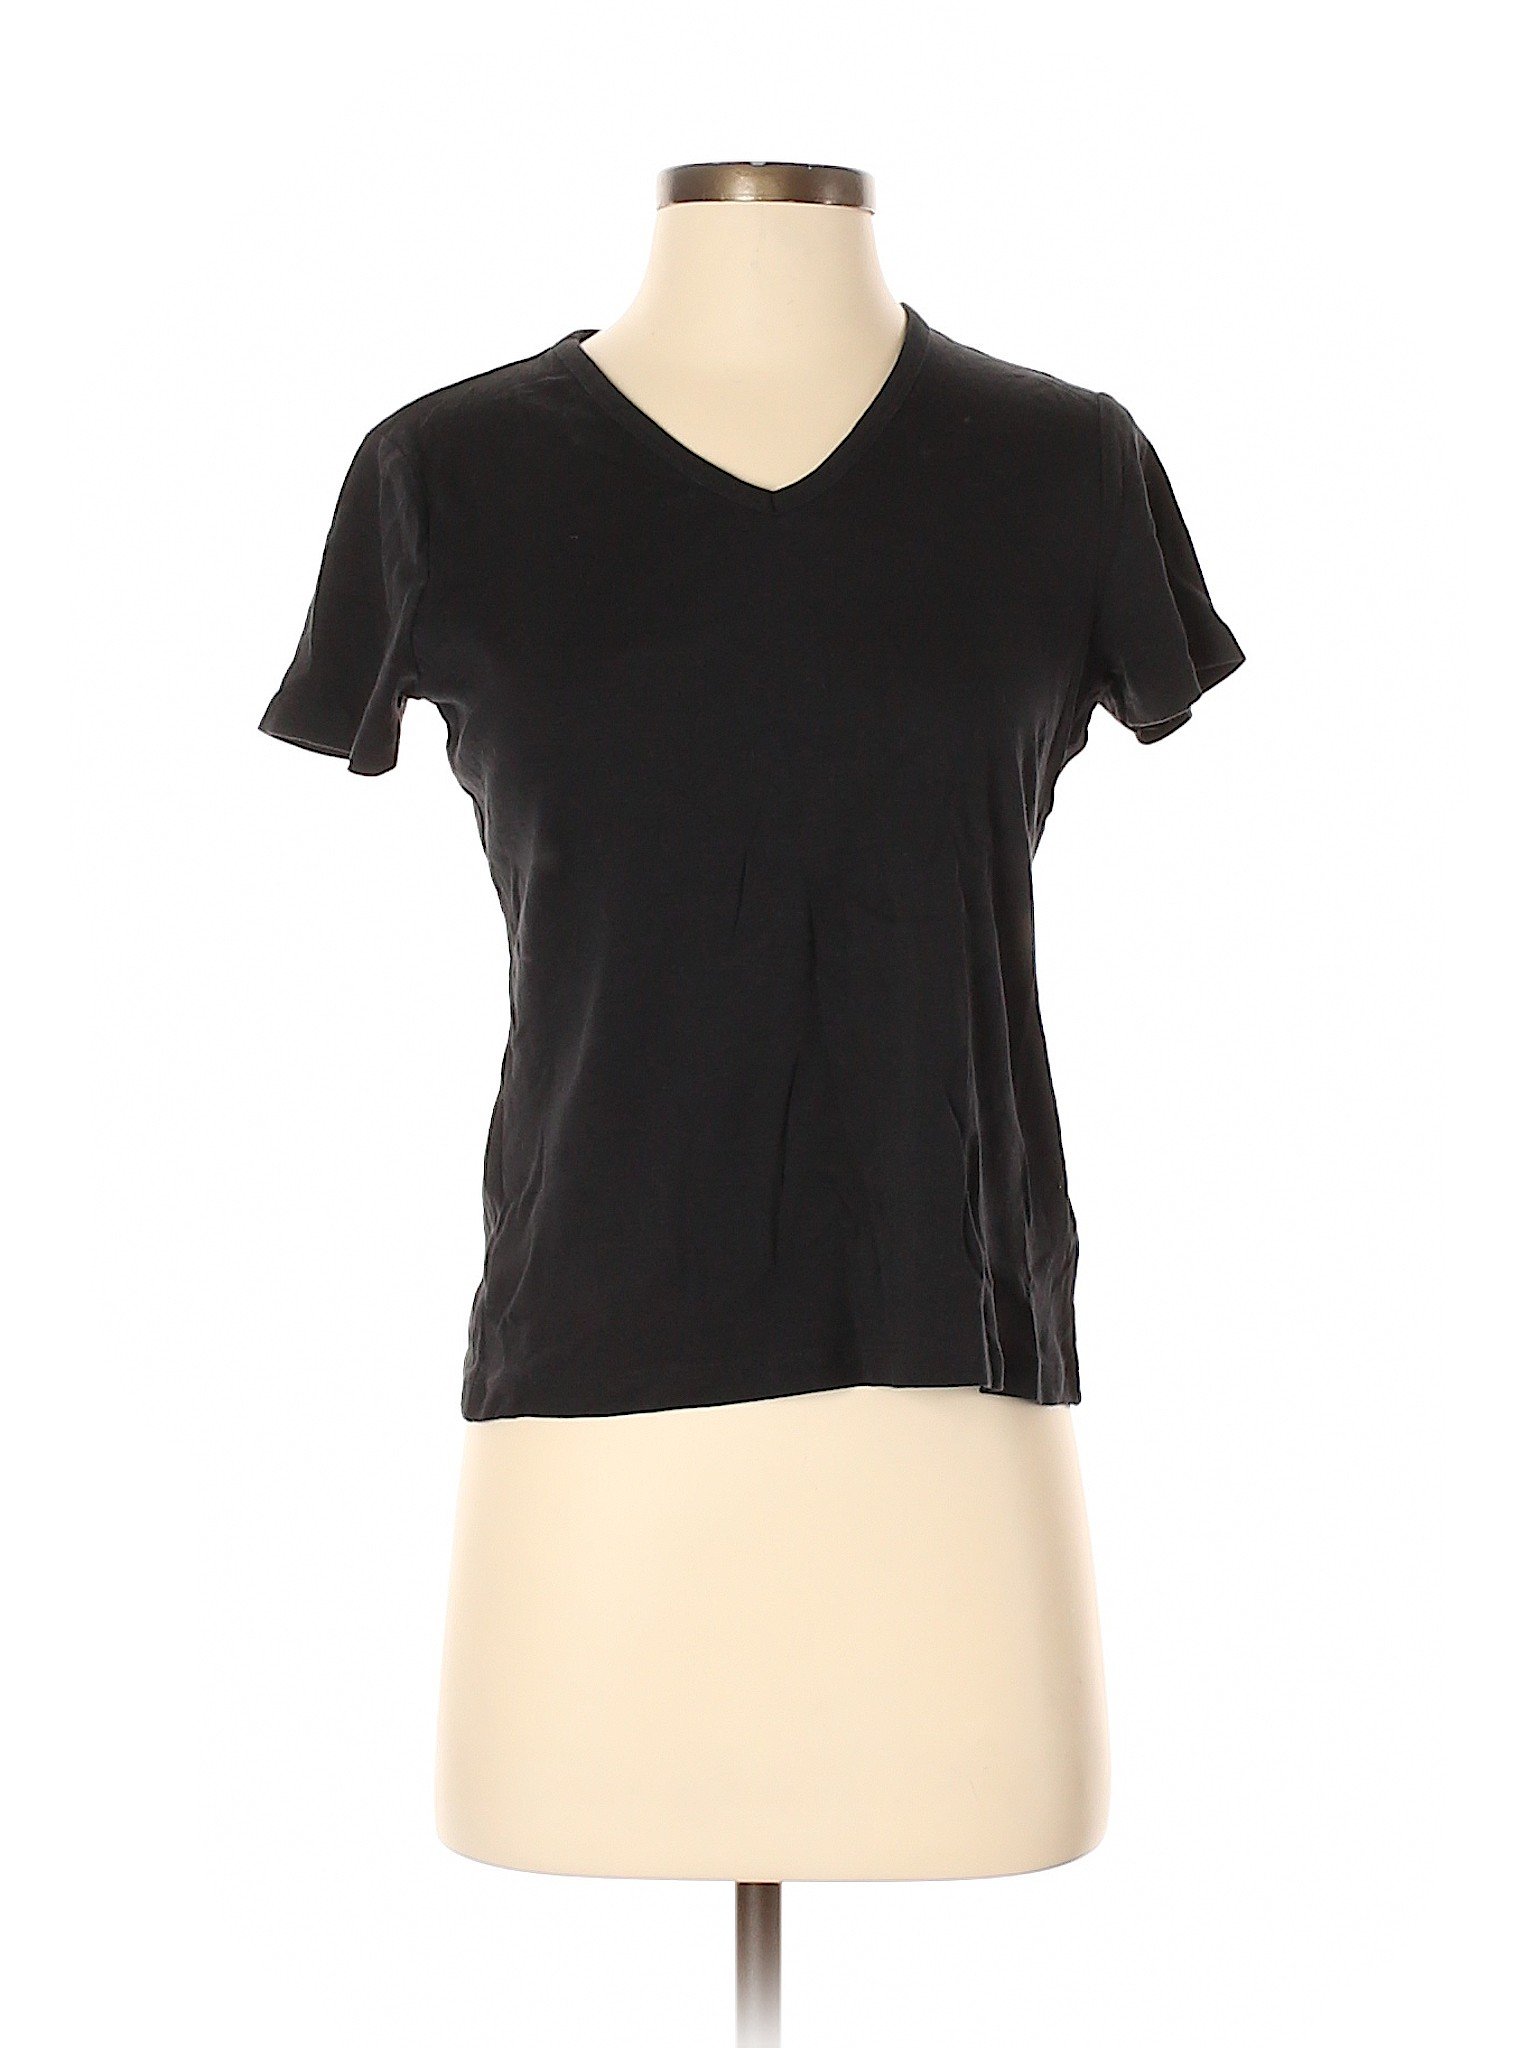 Lands' End Women Black Short Sleeve T-Shirt S | eBay